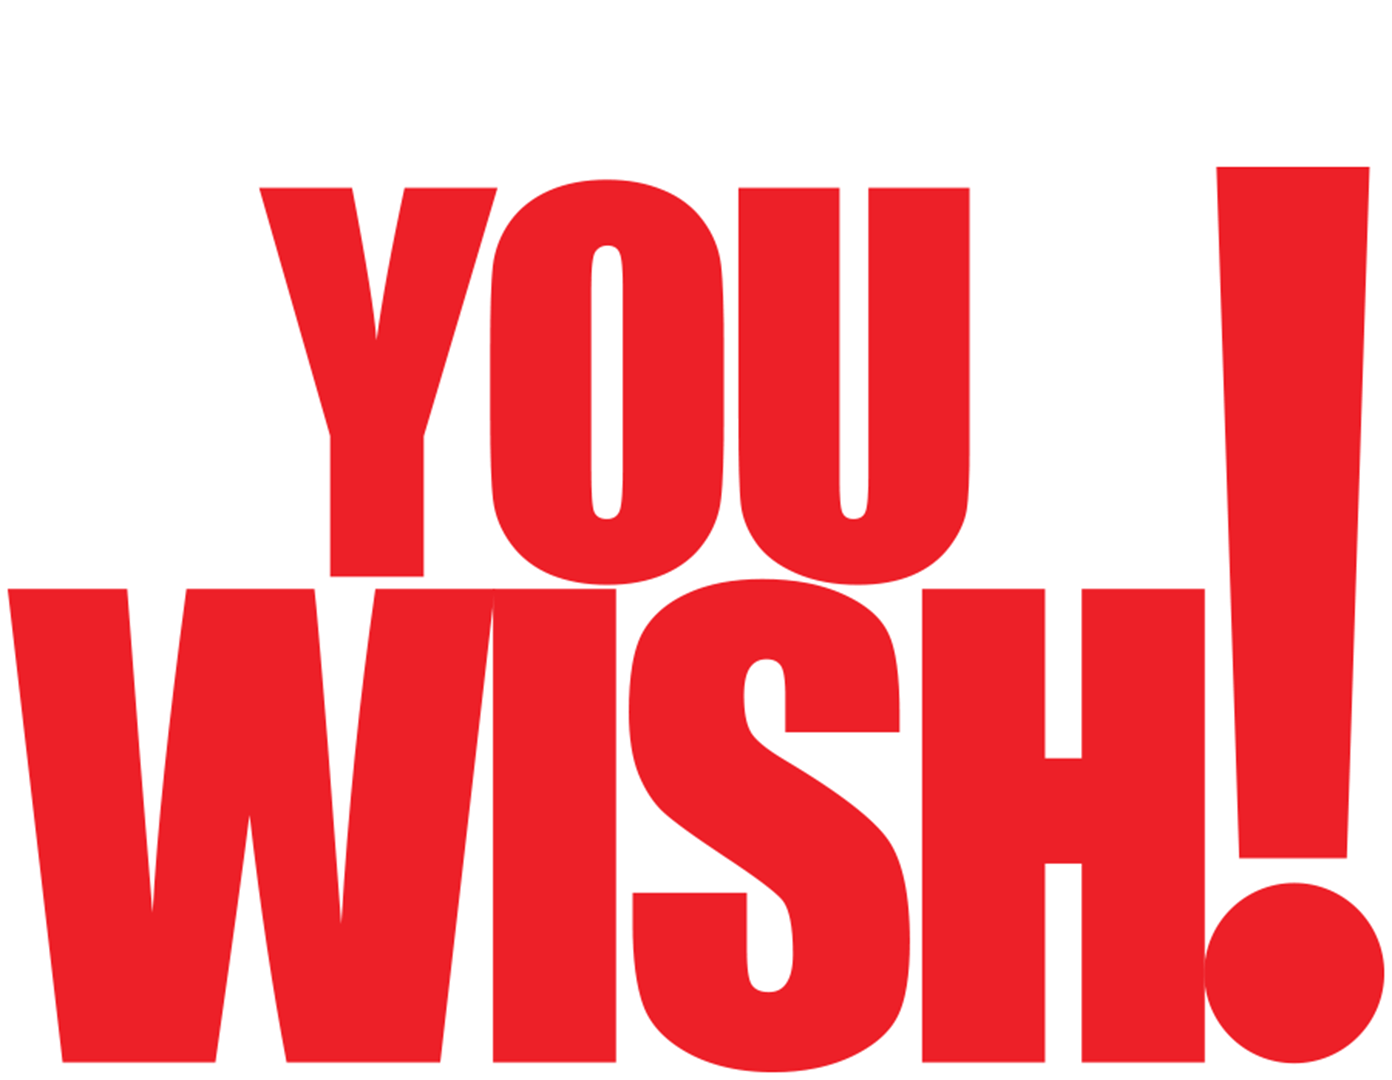 You Wish! Disney+